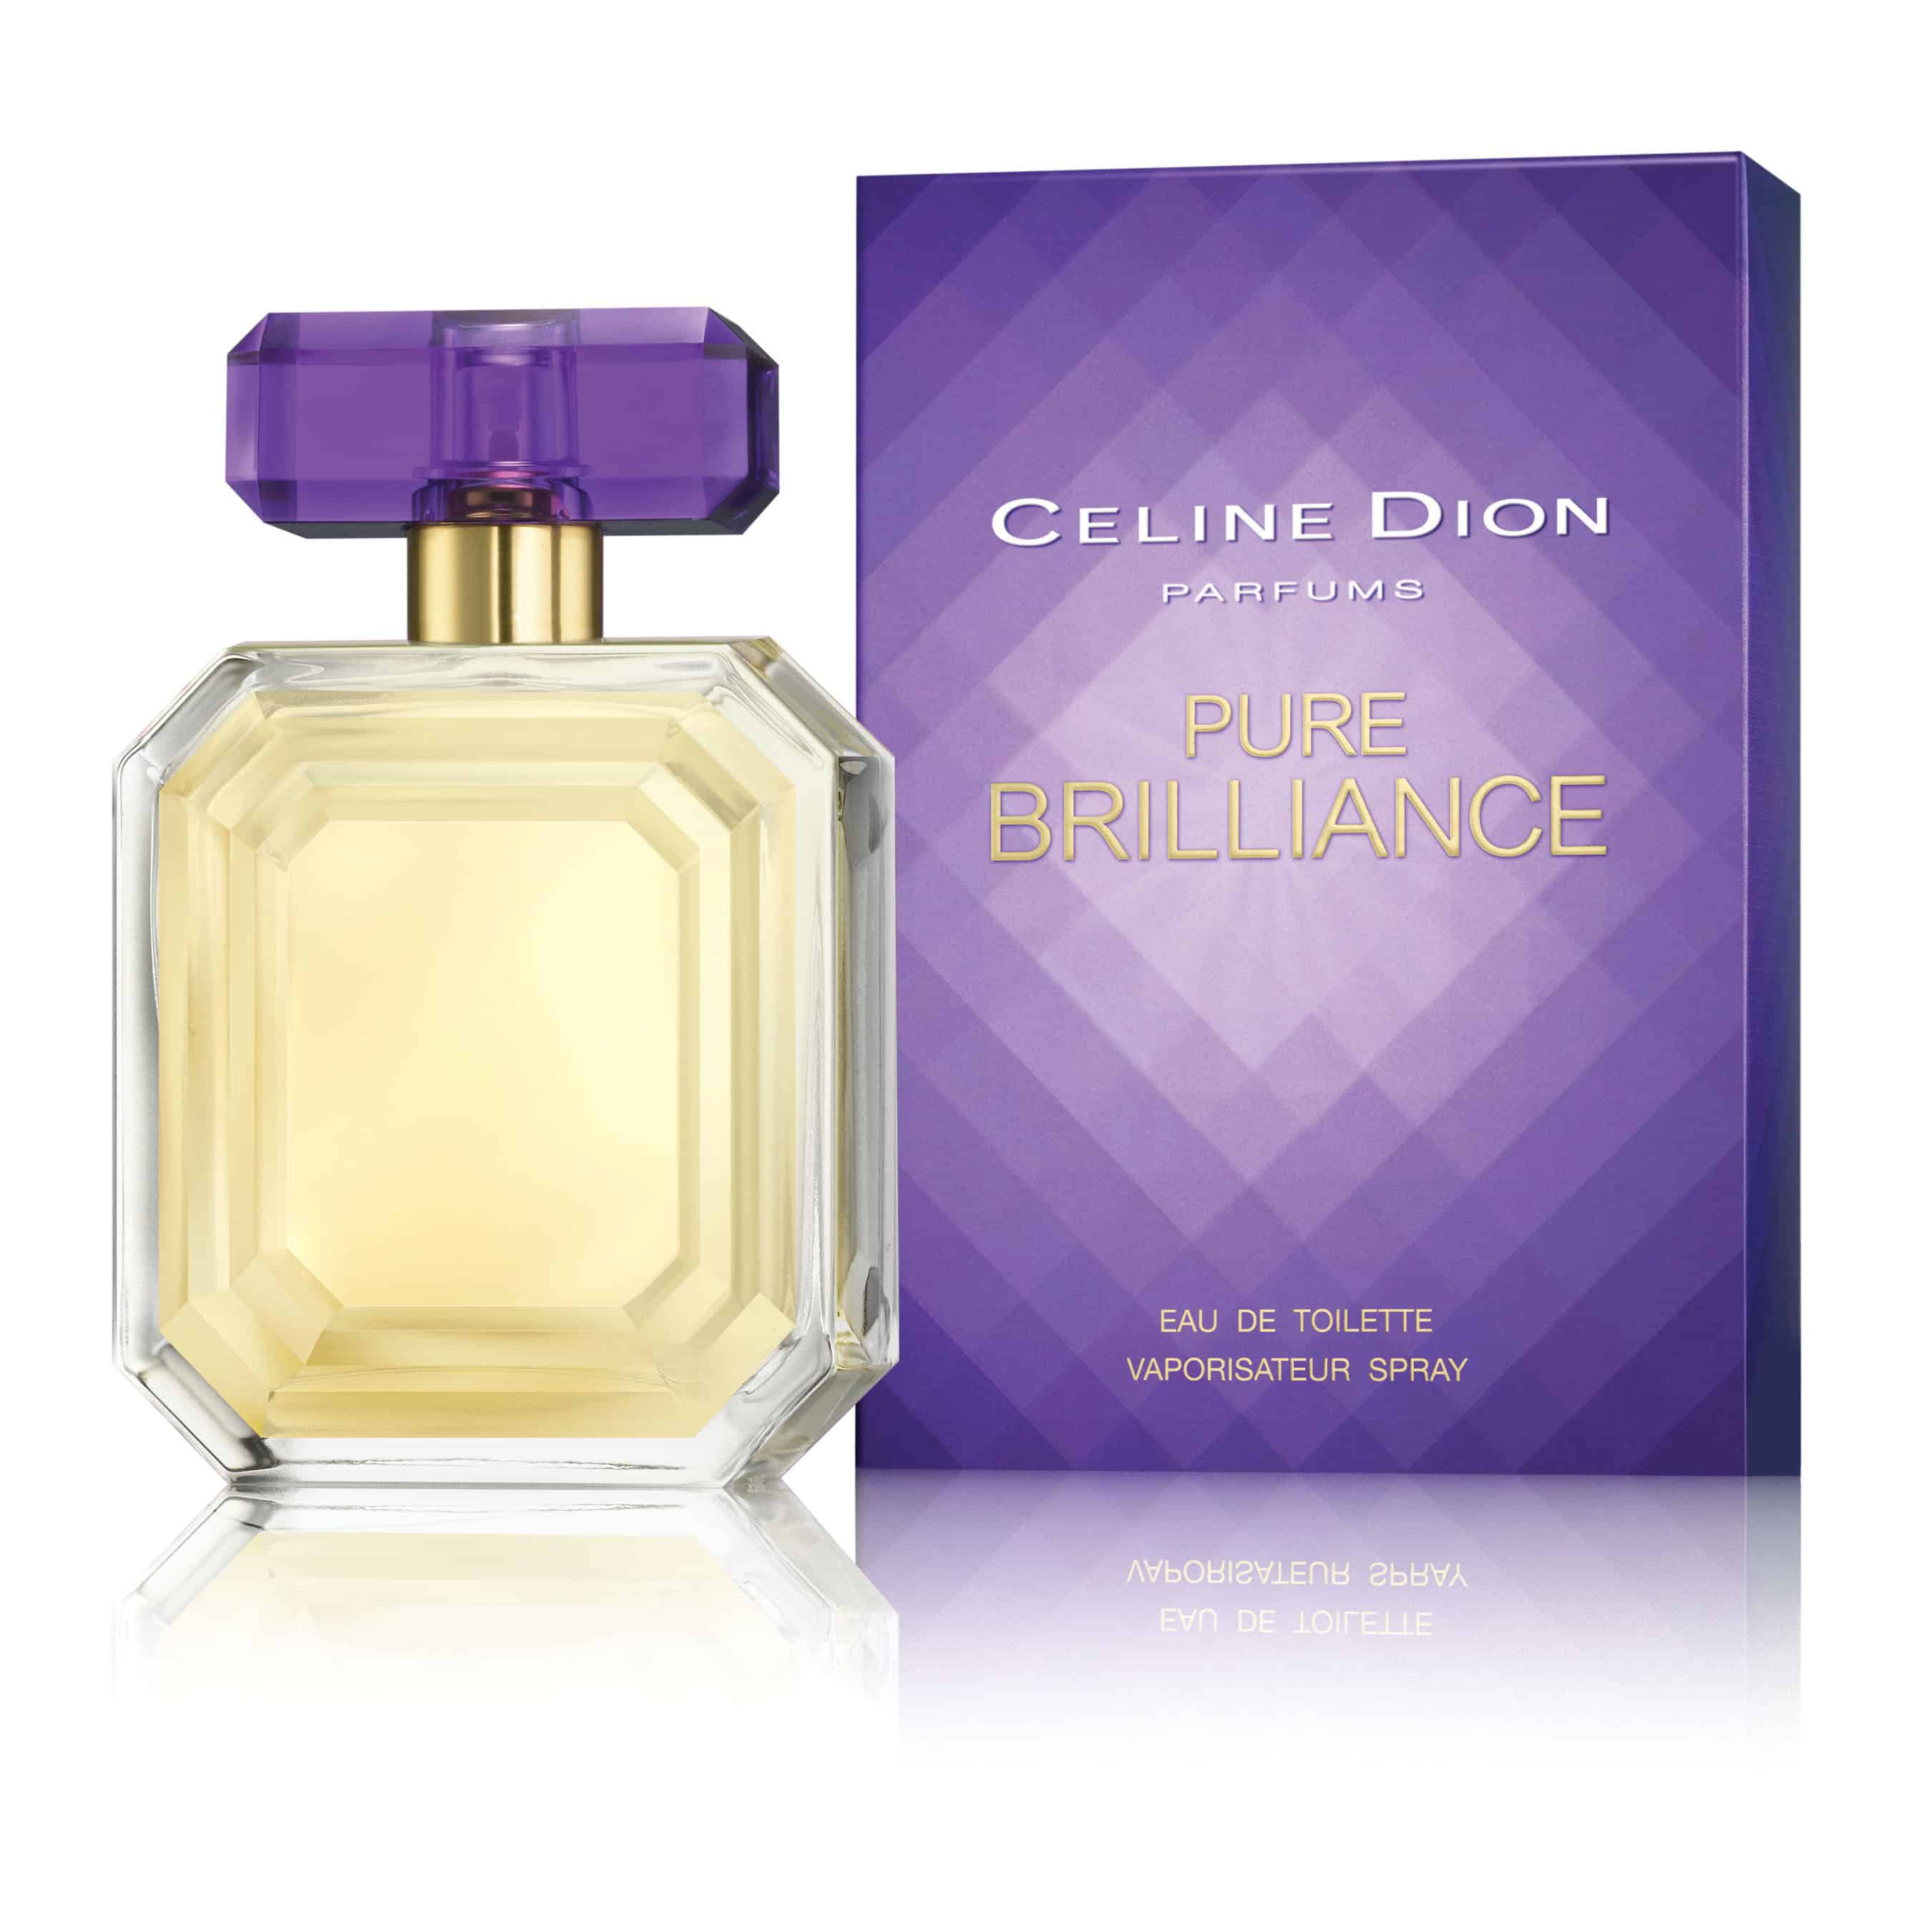 Celine Dionâ€™s fragrance, Pure Brilliance (27.20-33.50, CVS ...